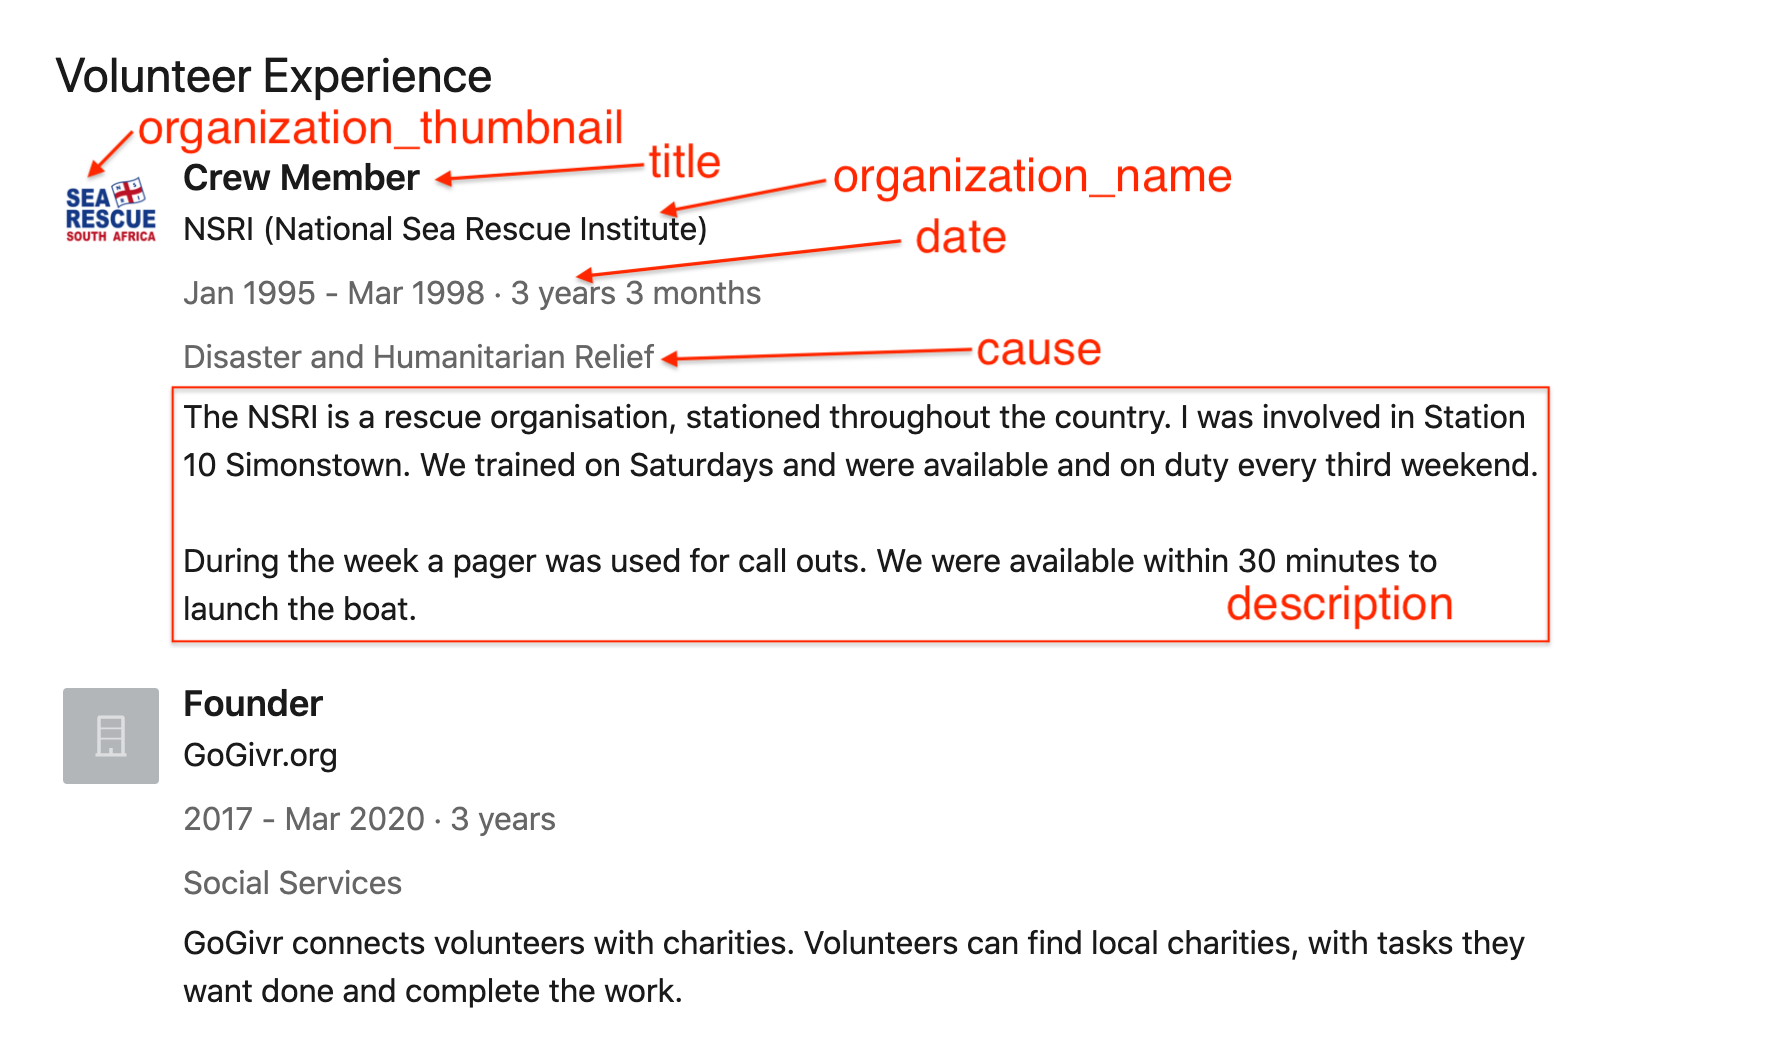 Volunteer experience for ID="flyingmogul"